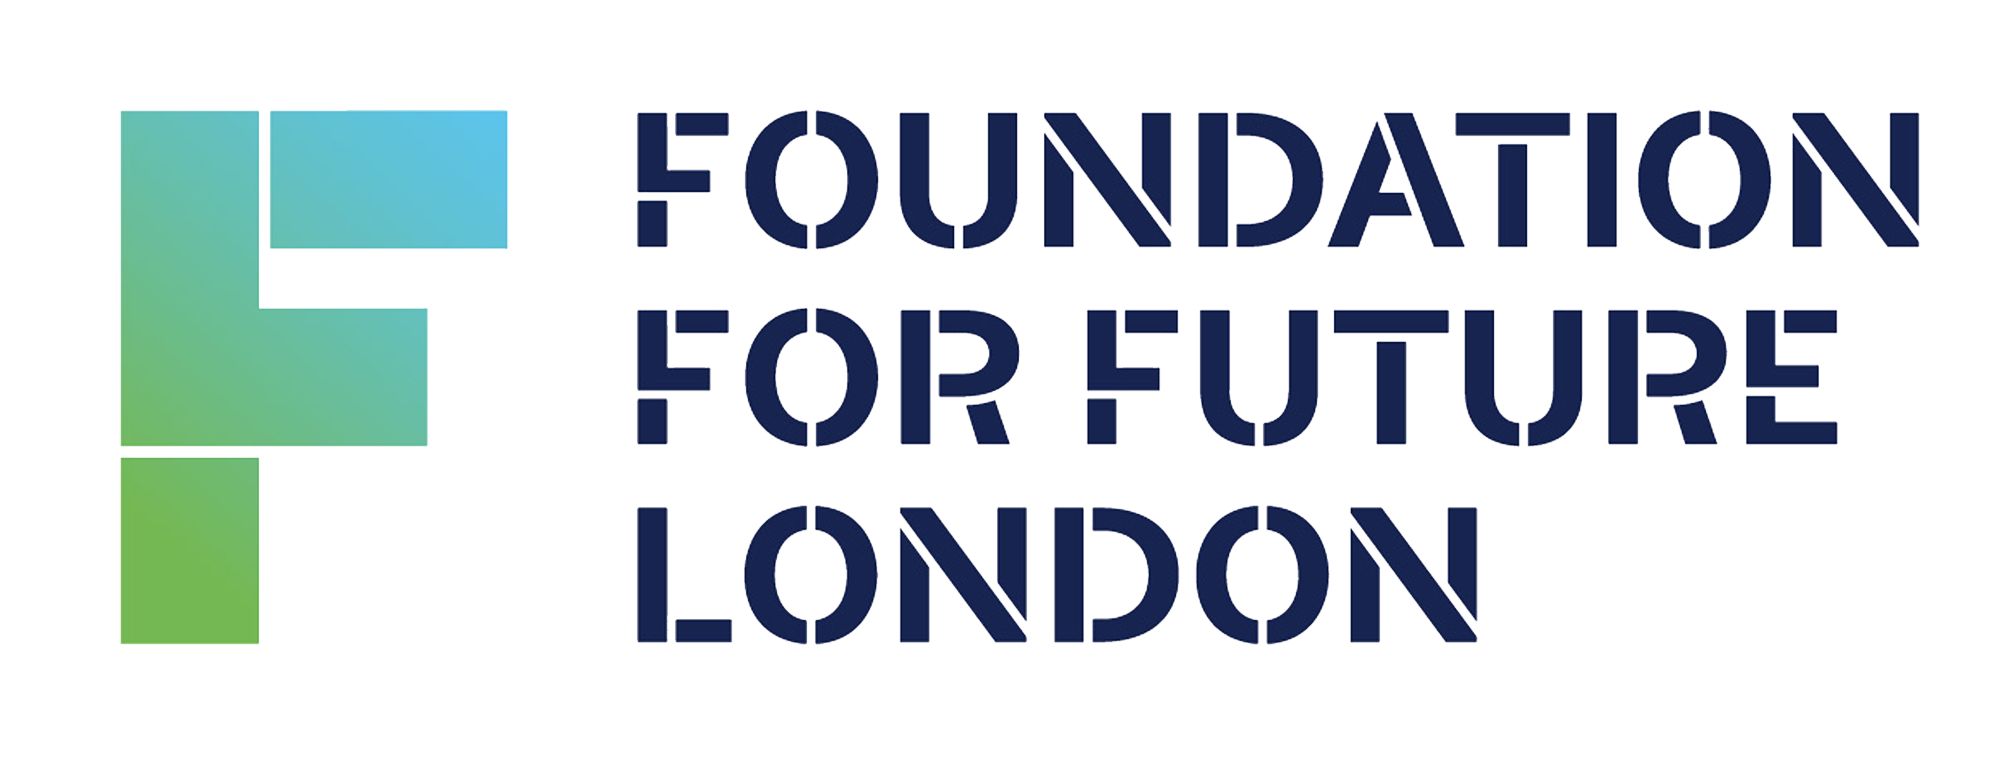 Future Foundation (@FutureFndation) / X